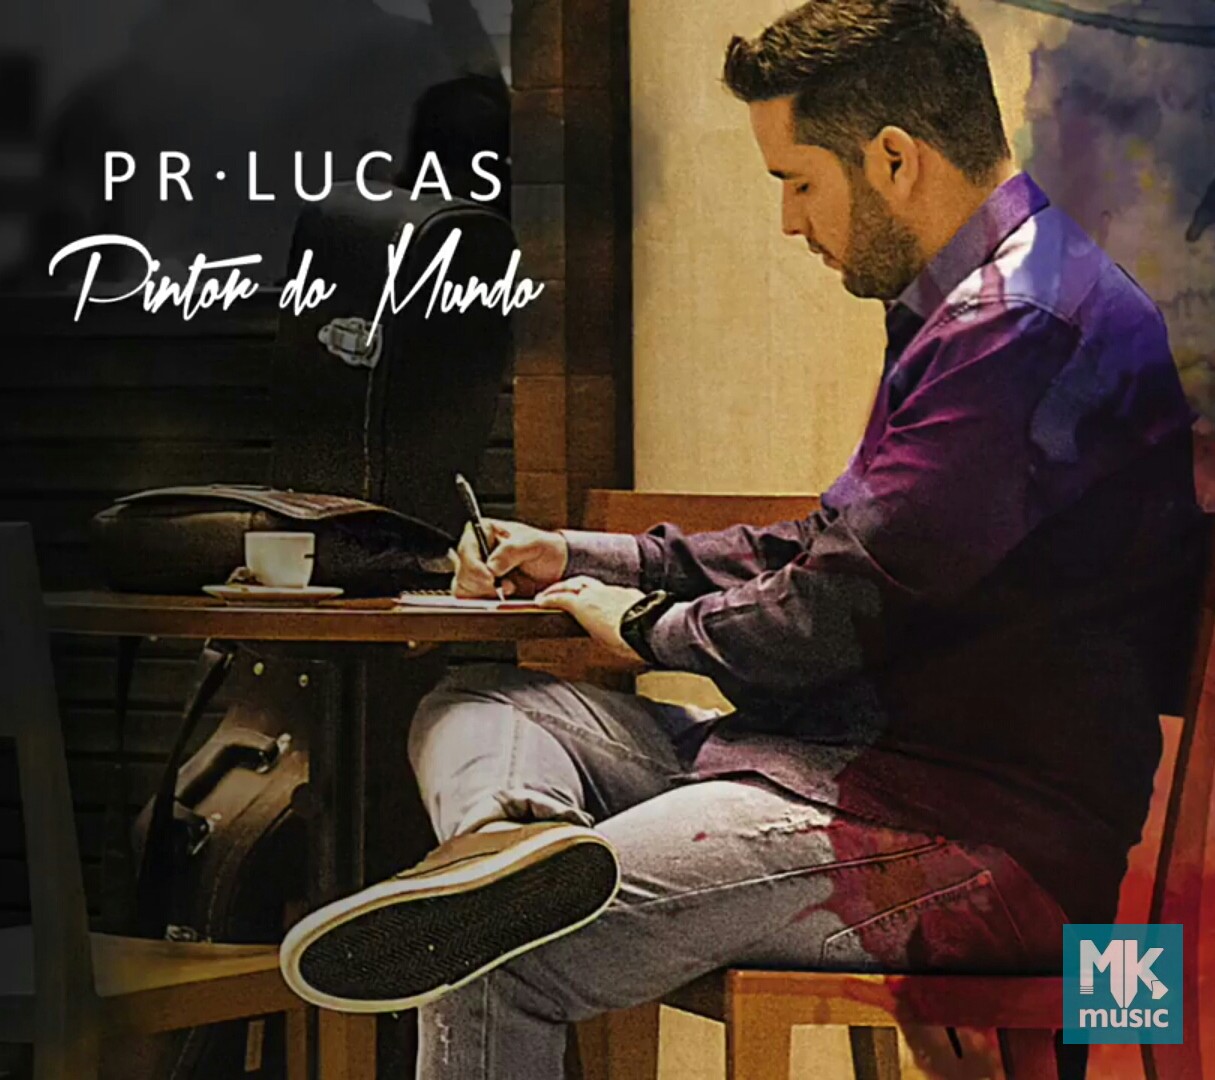 Cofira agora o preview do álbum Pintor do Mundo do Pr. Lucas